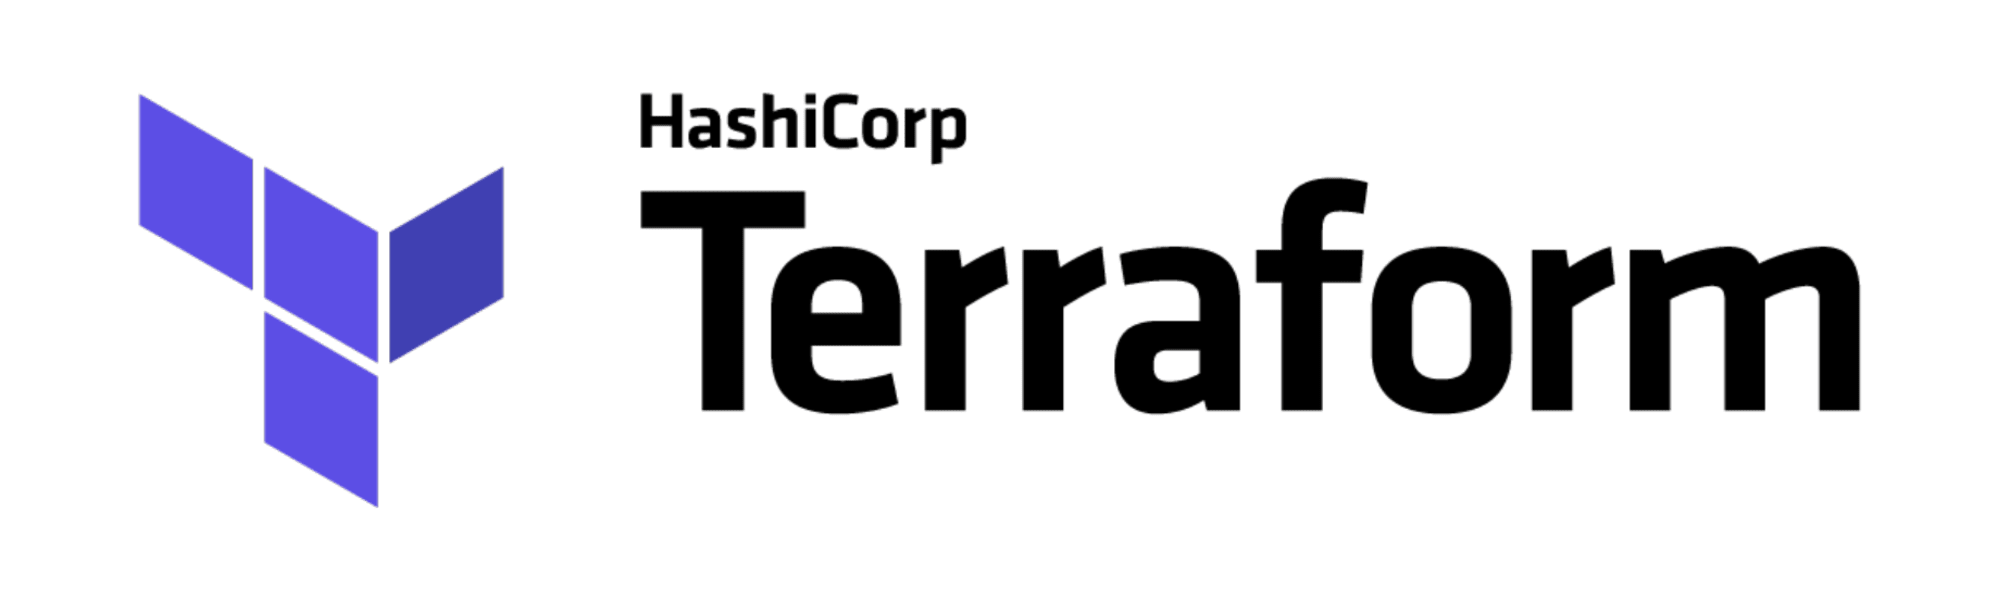 terraform title